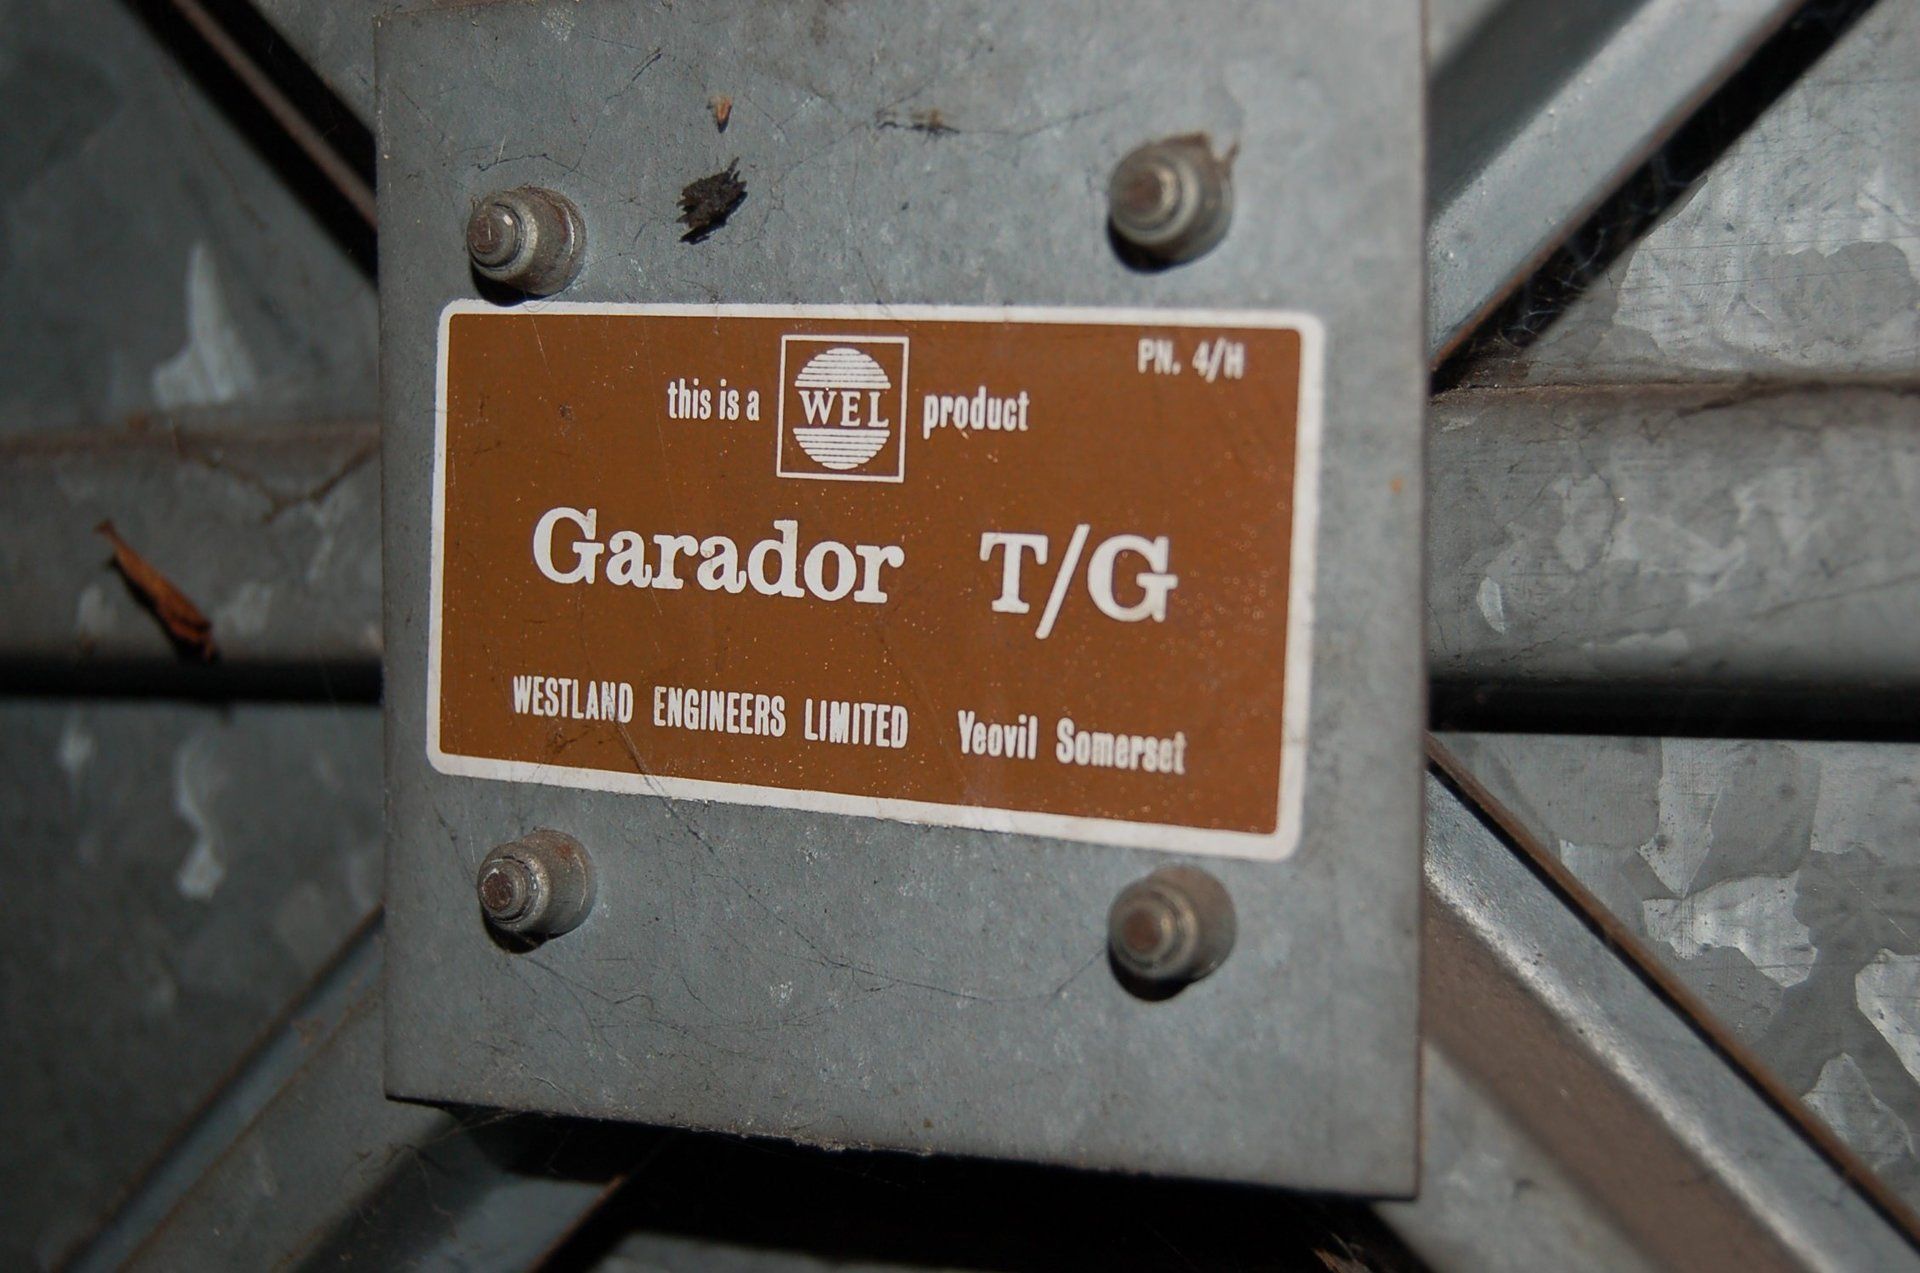 Garador spring box units repairs